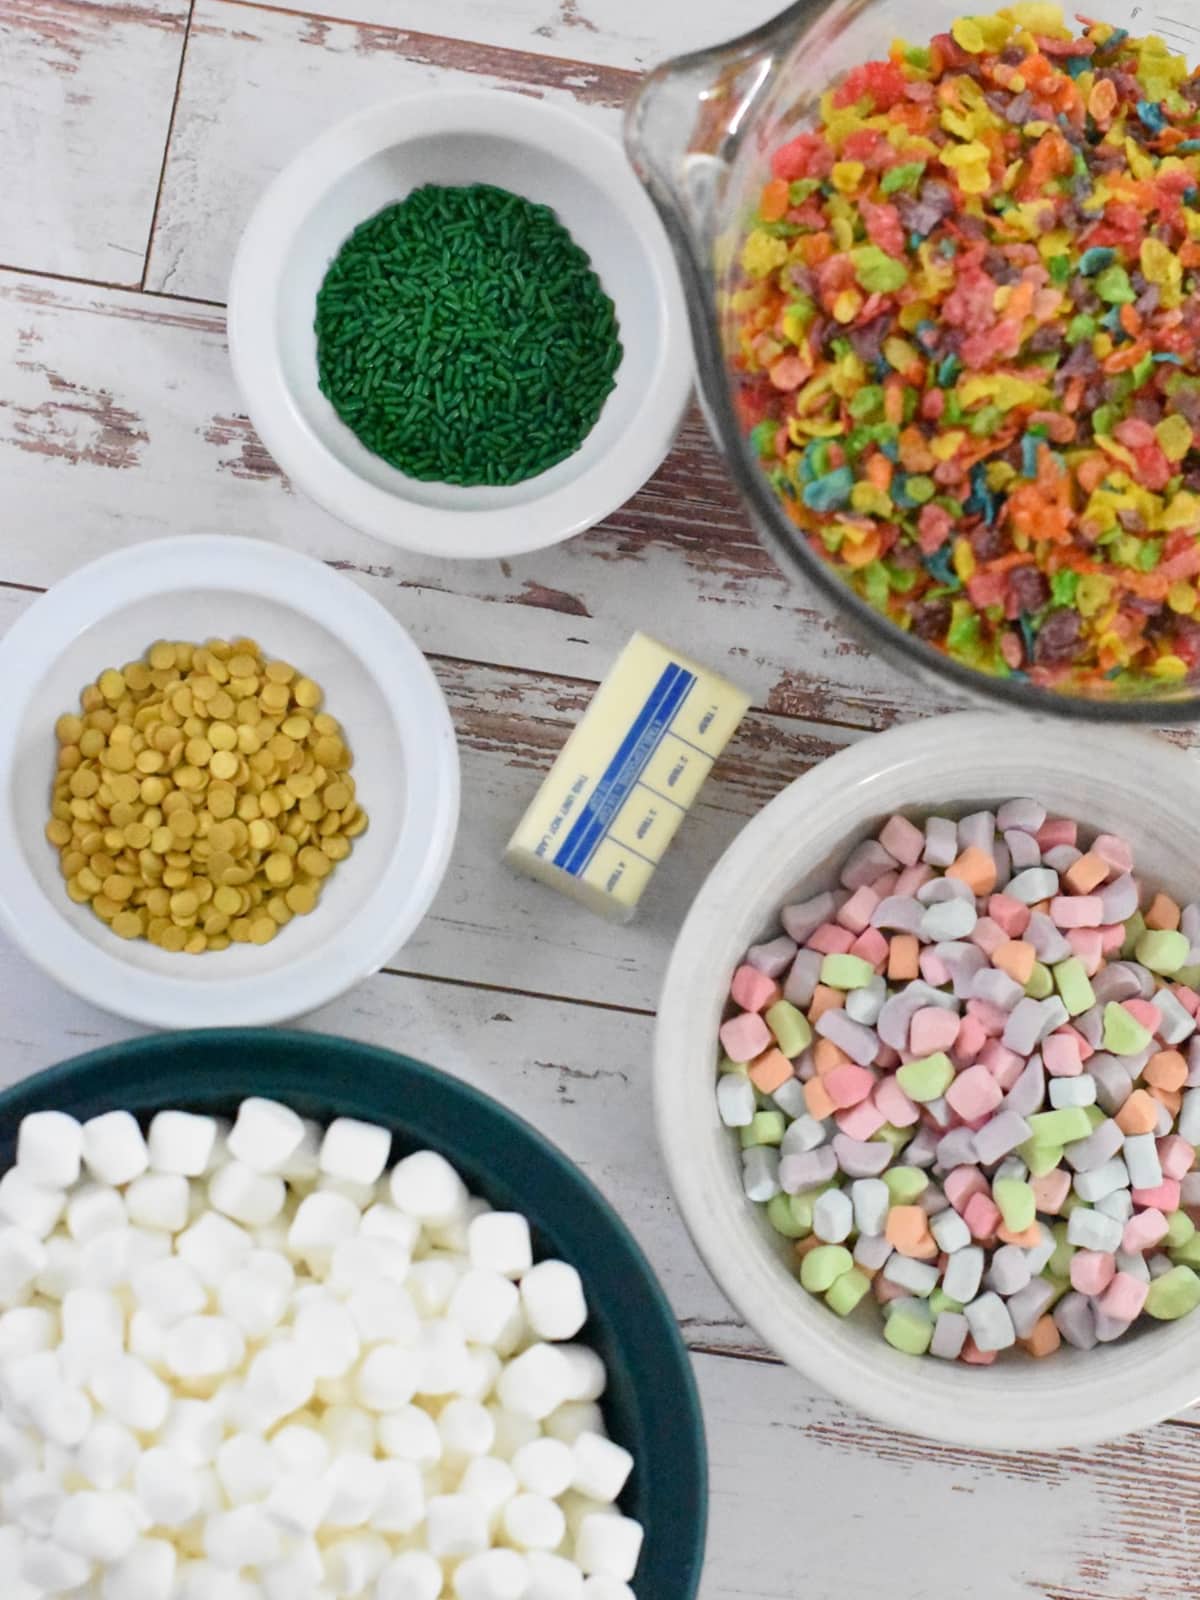 Rainbow bars Snack Ingredients in bowls